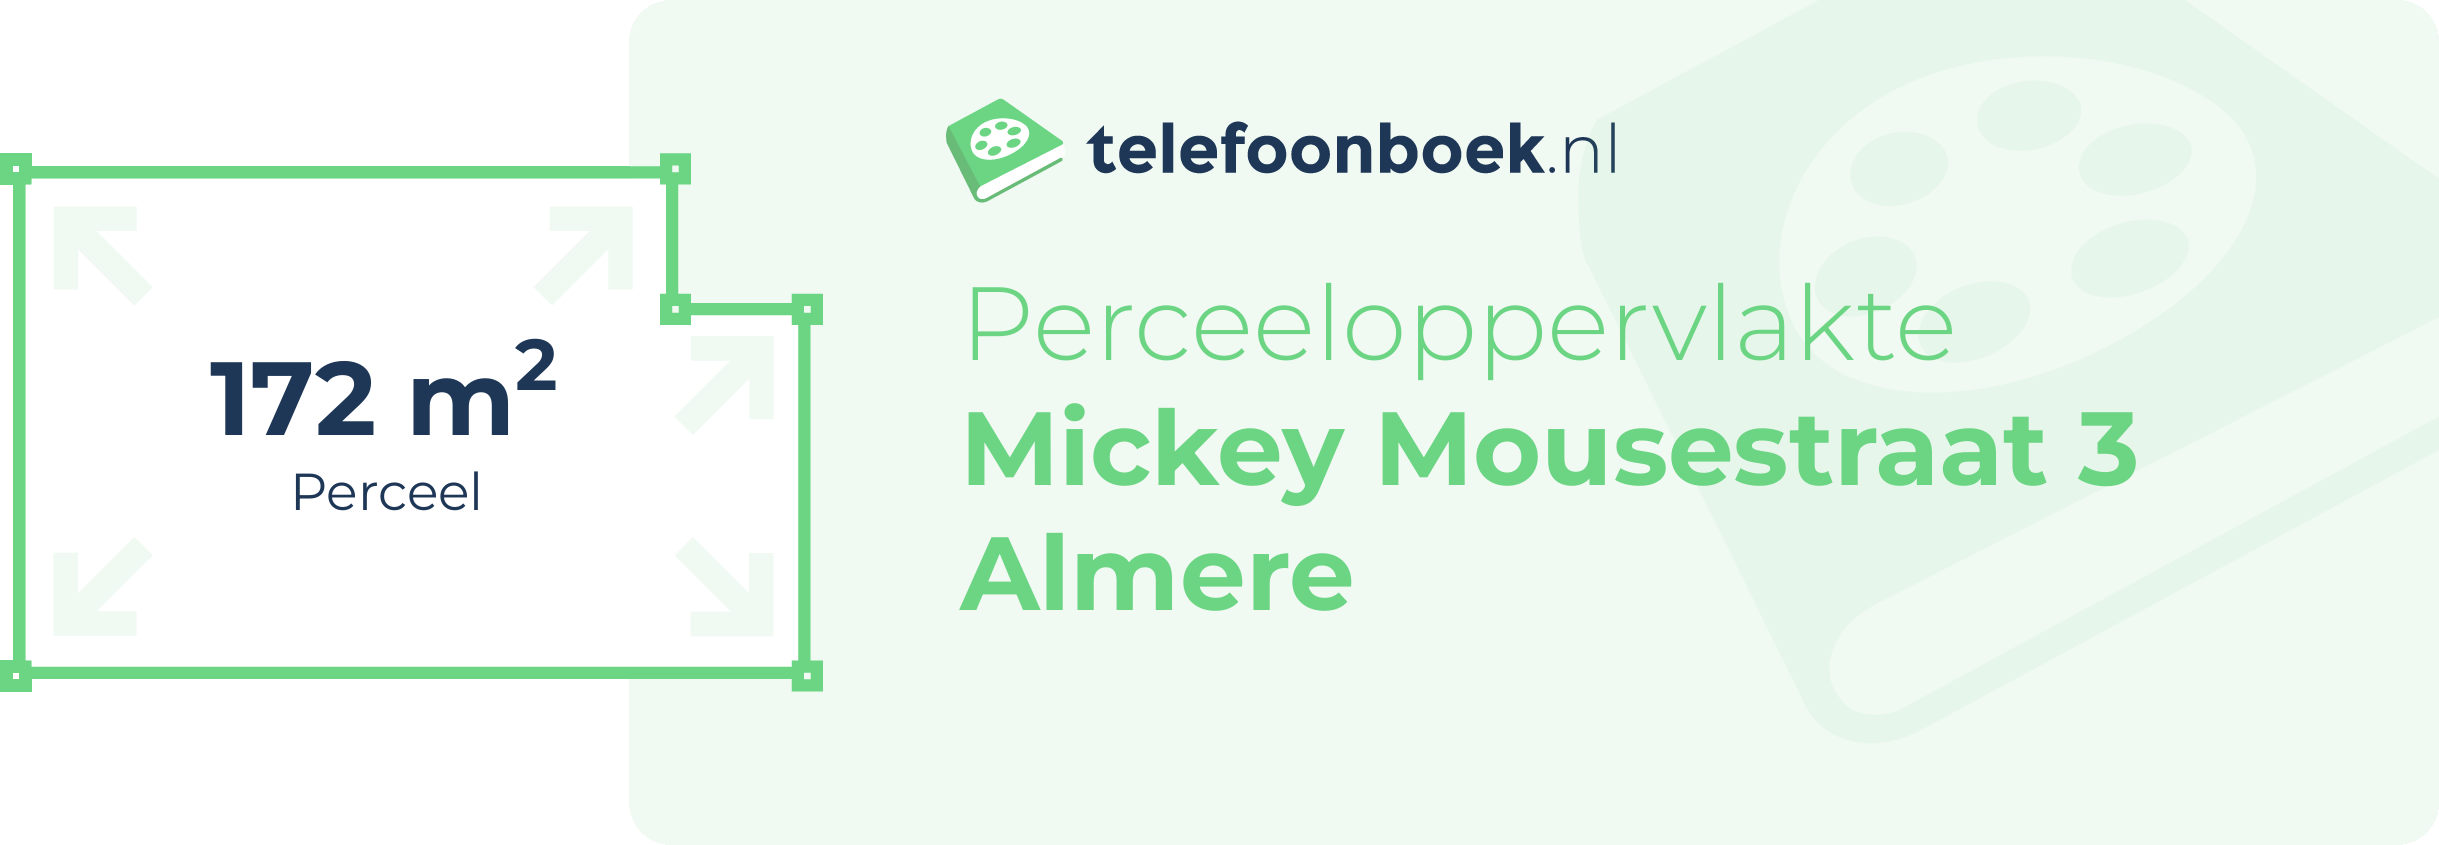 Perceeloppervlakte Mickey Mousestraat 3 Almere